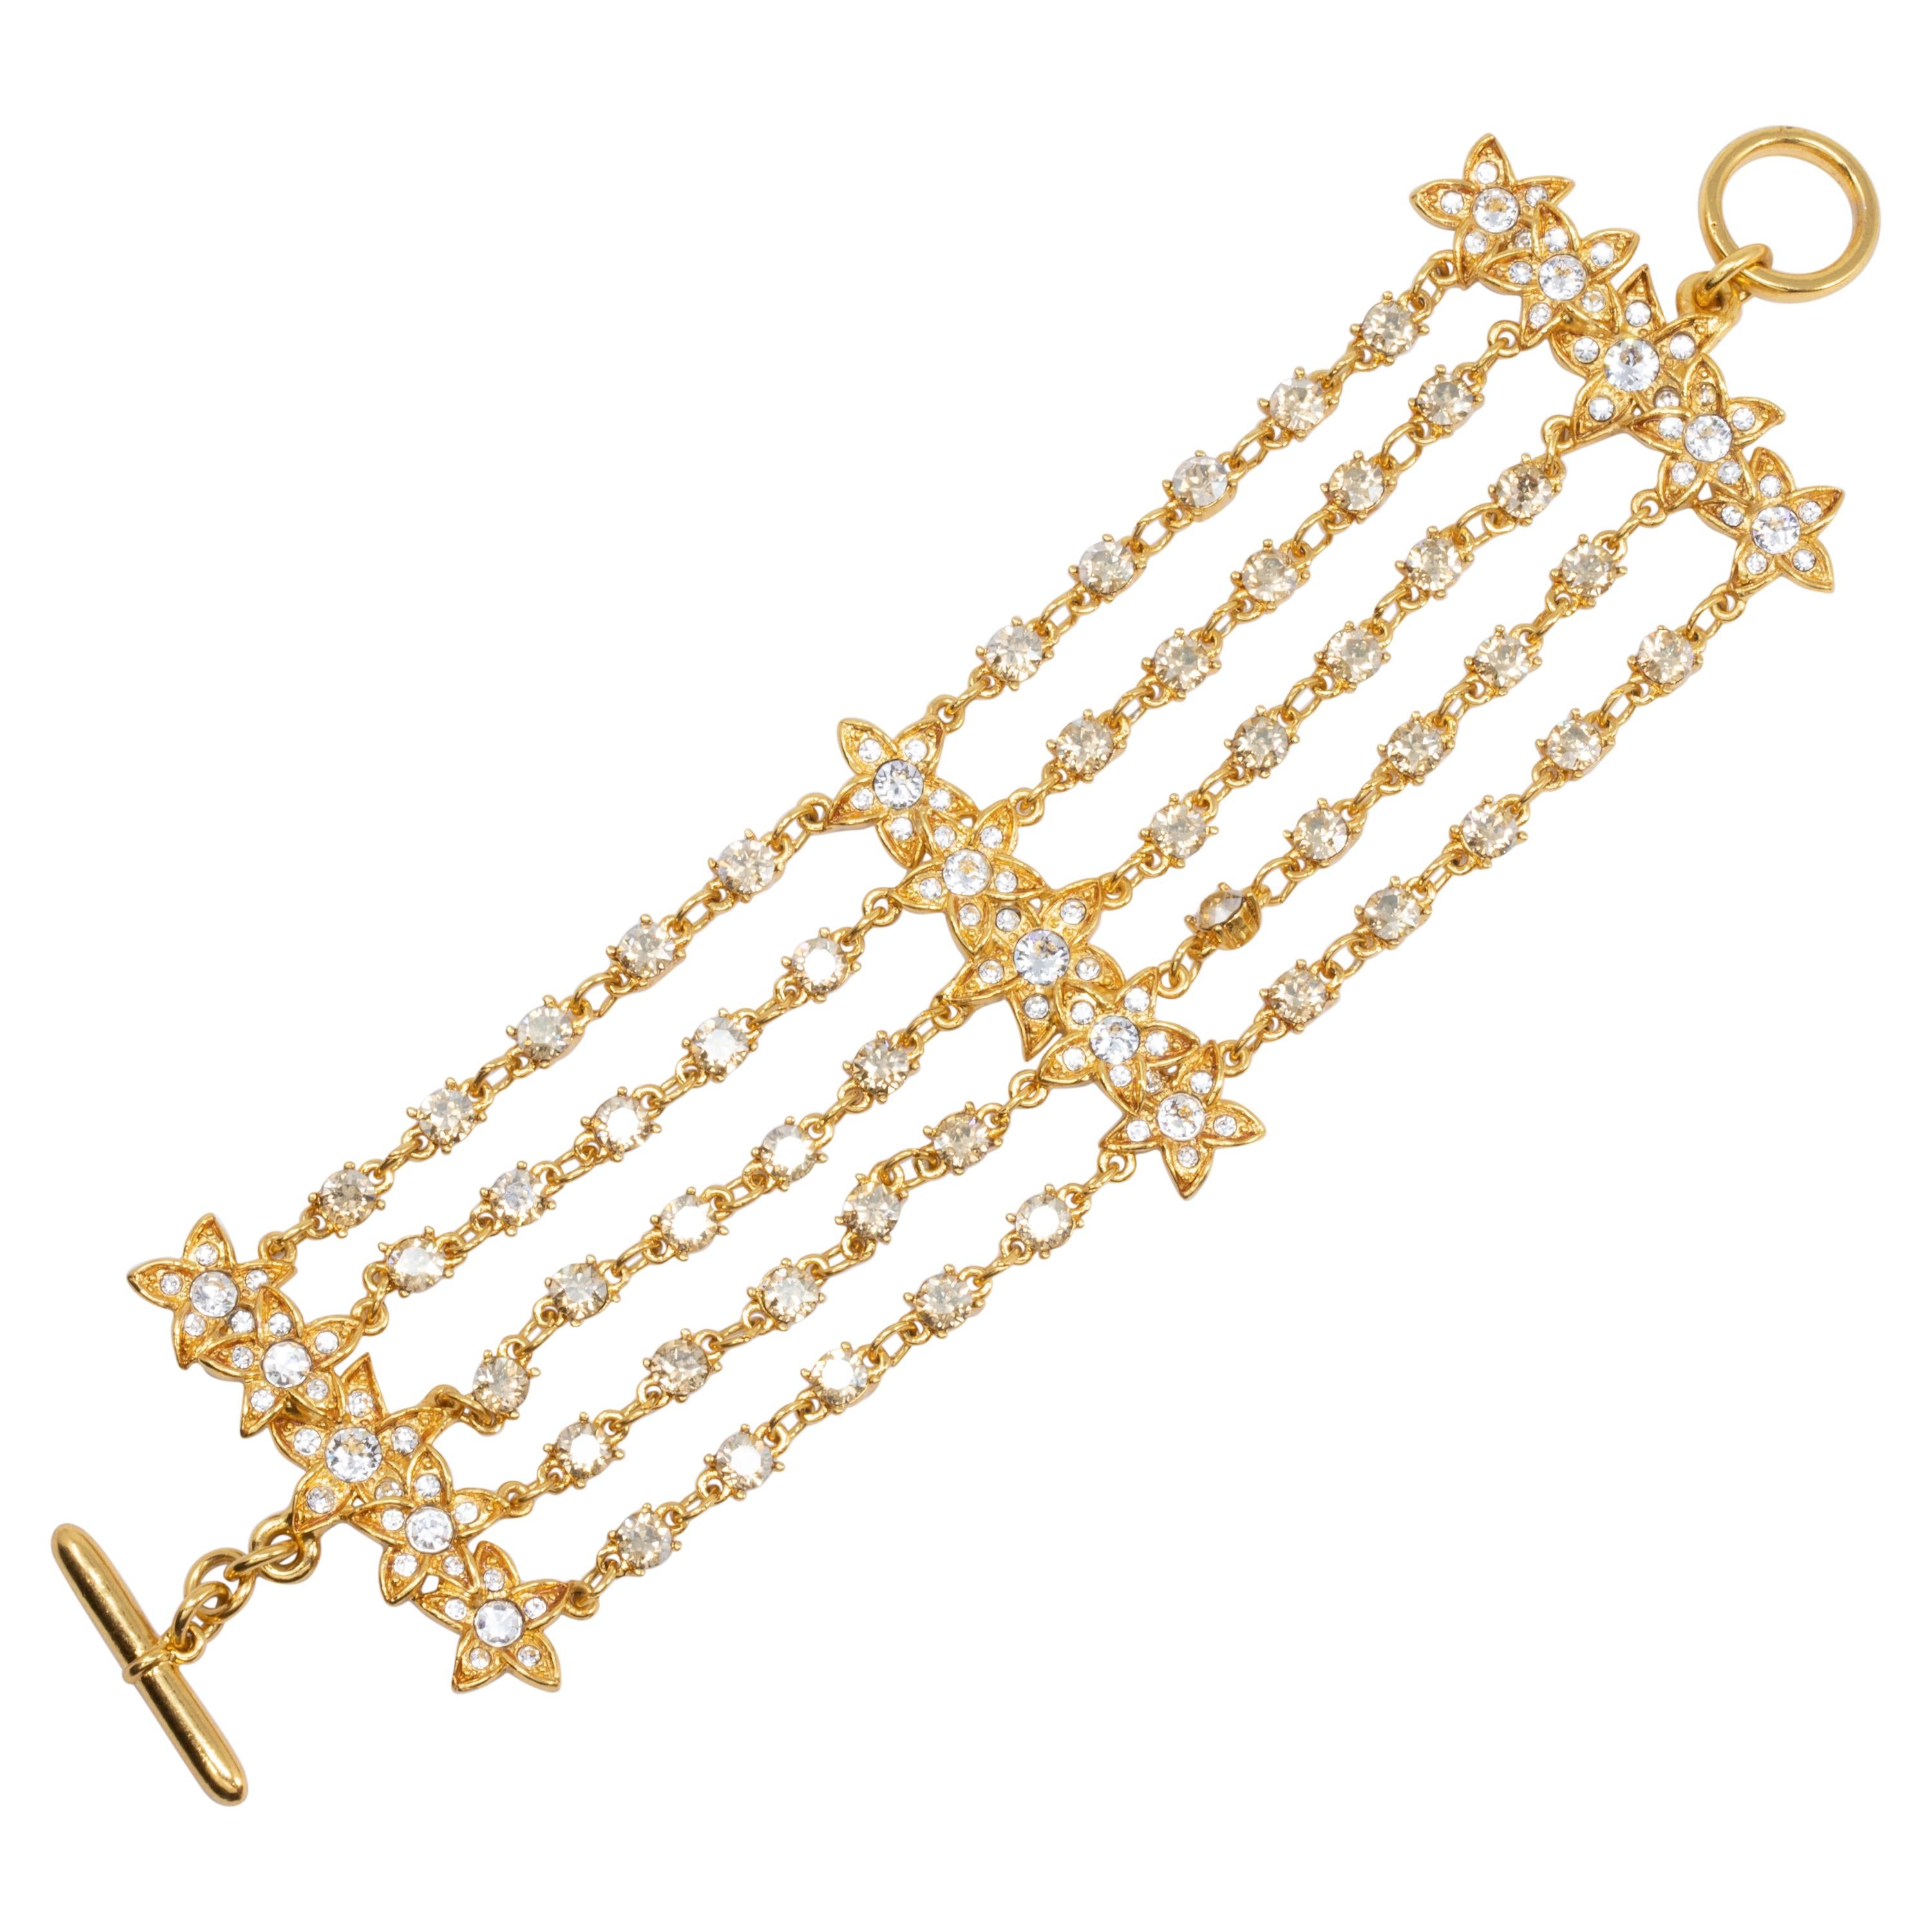 Oscar de la Renta Five Strand Floral Chain Bracelet, Clear Crystals, in Gold For Sale